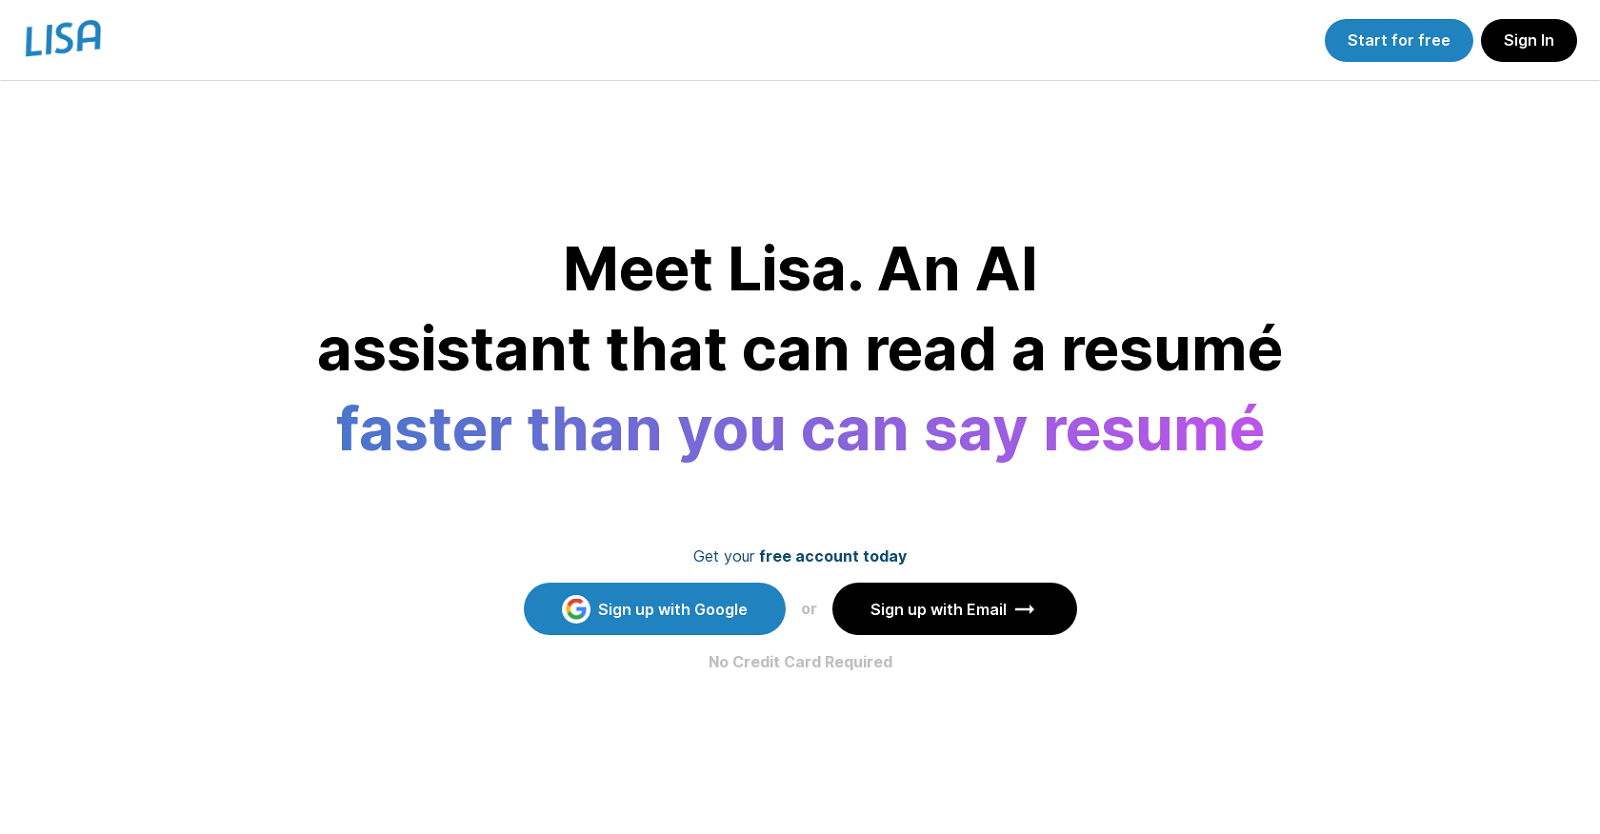 Lisa website